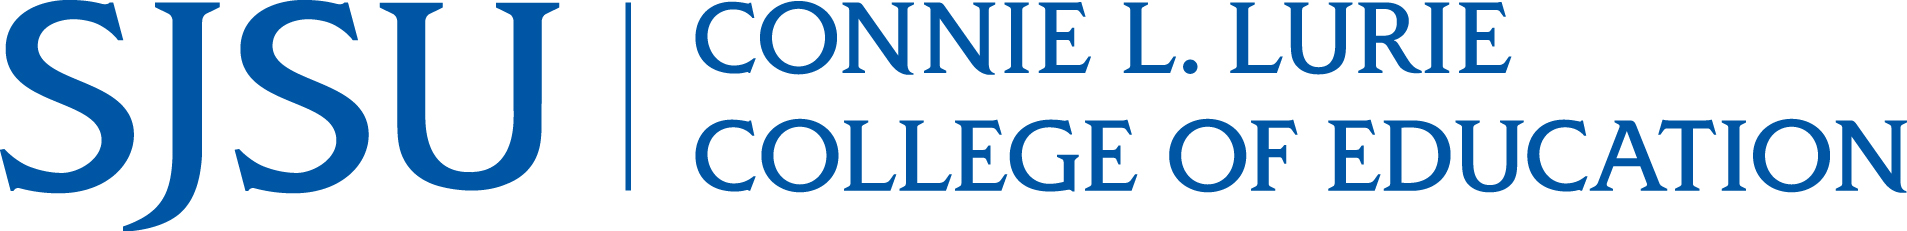 SJSU: Connie L. Lurie College of Education